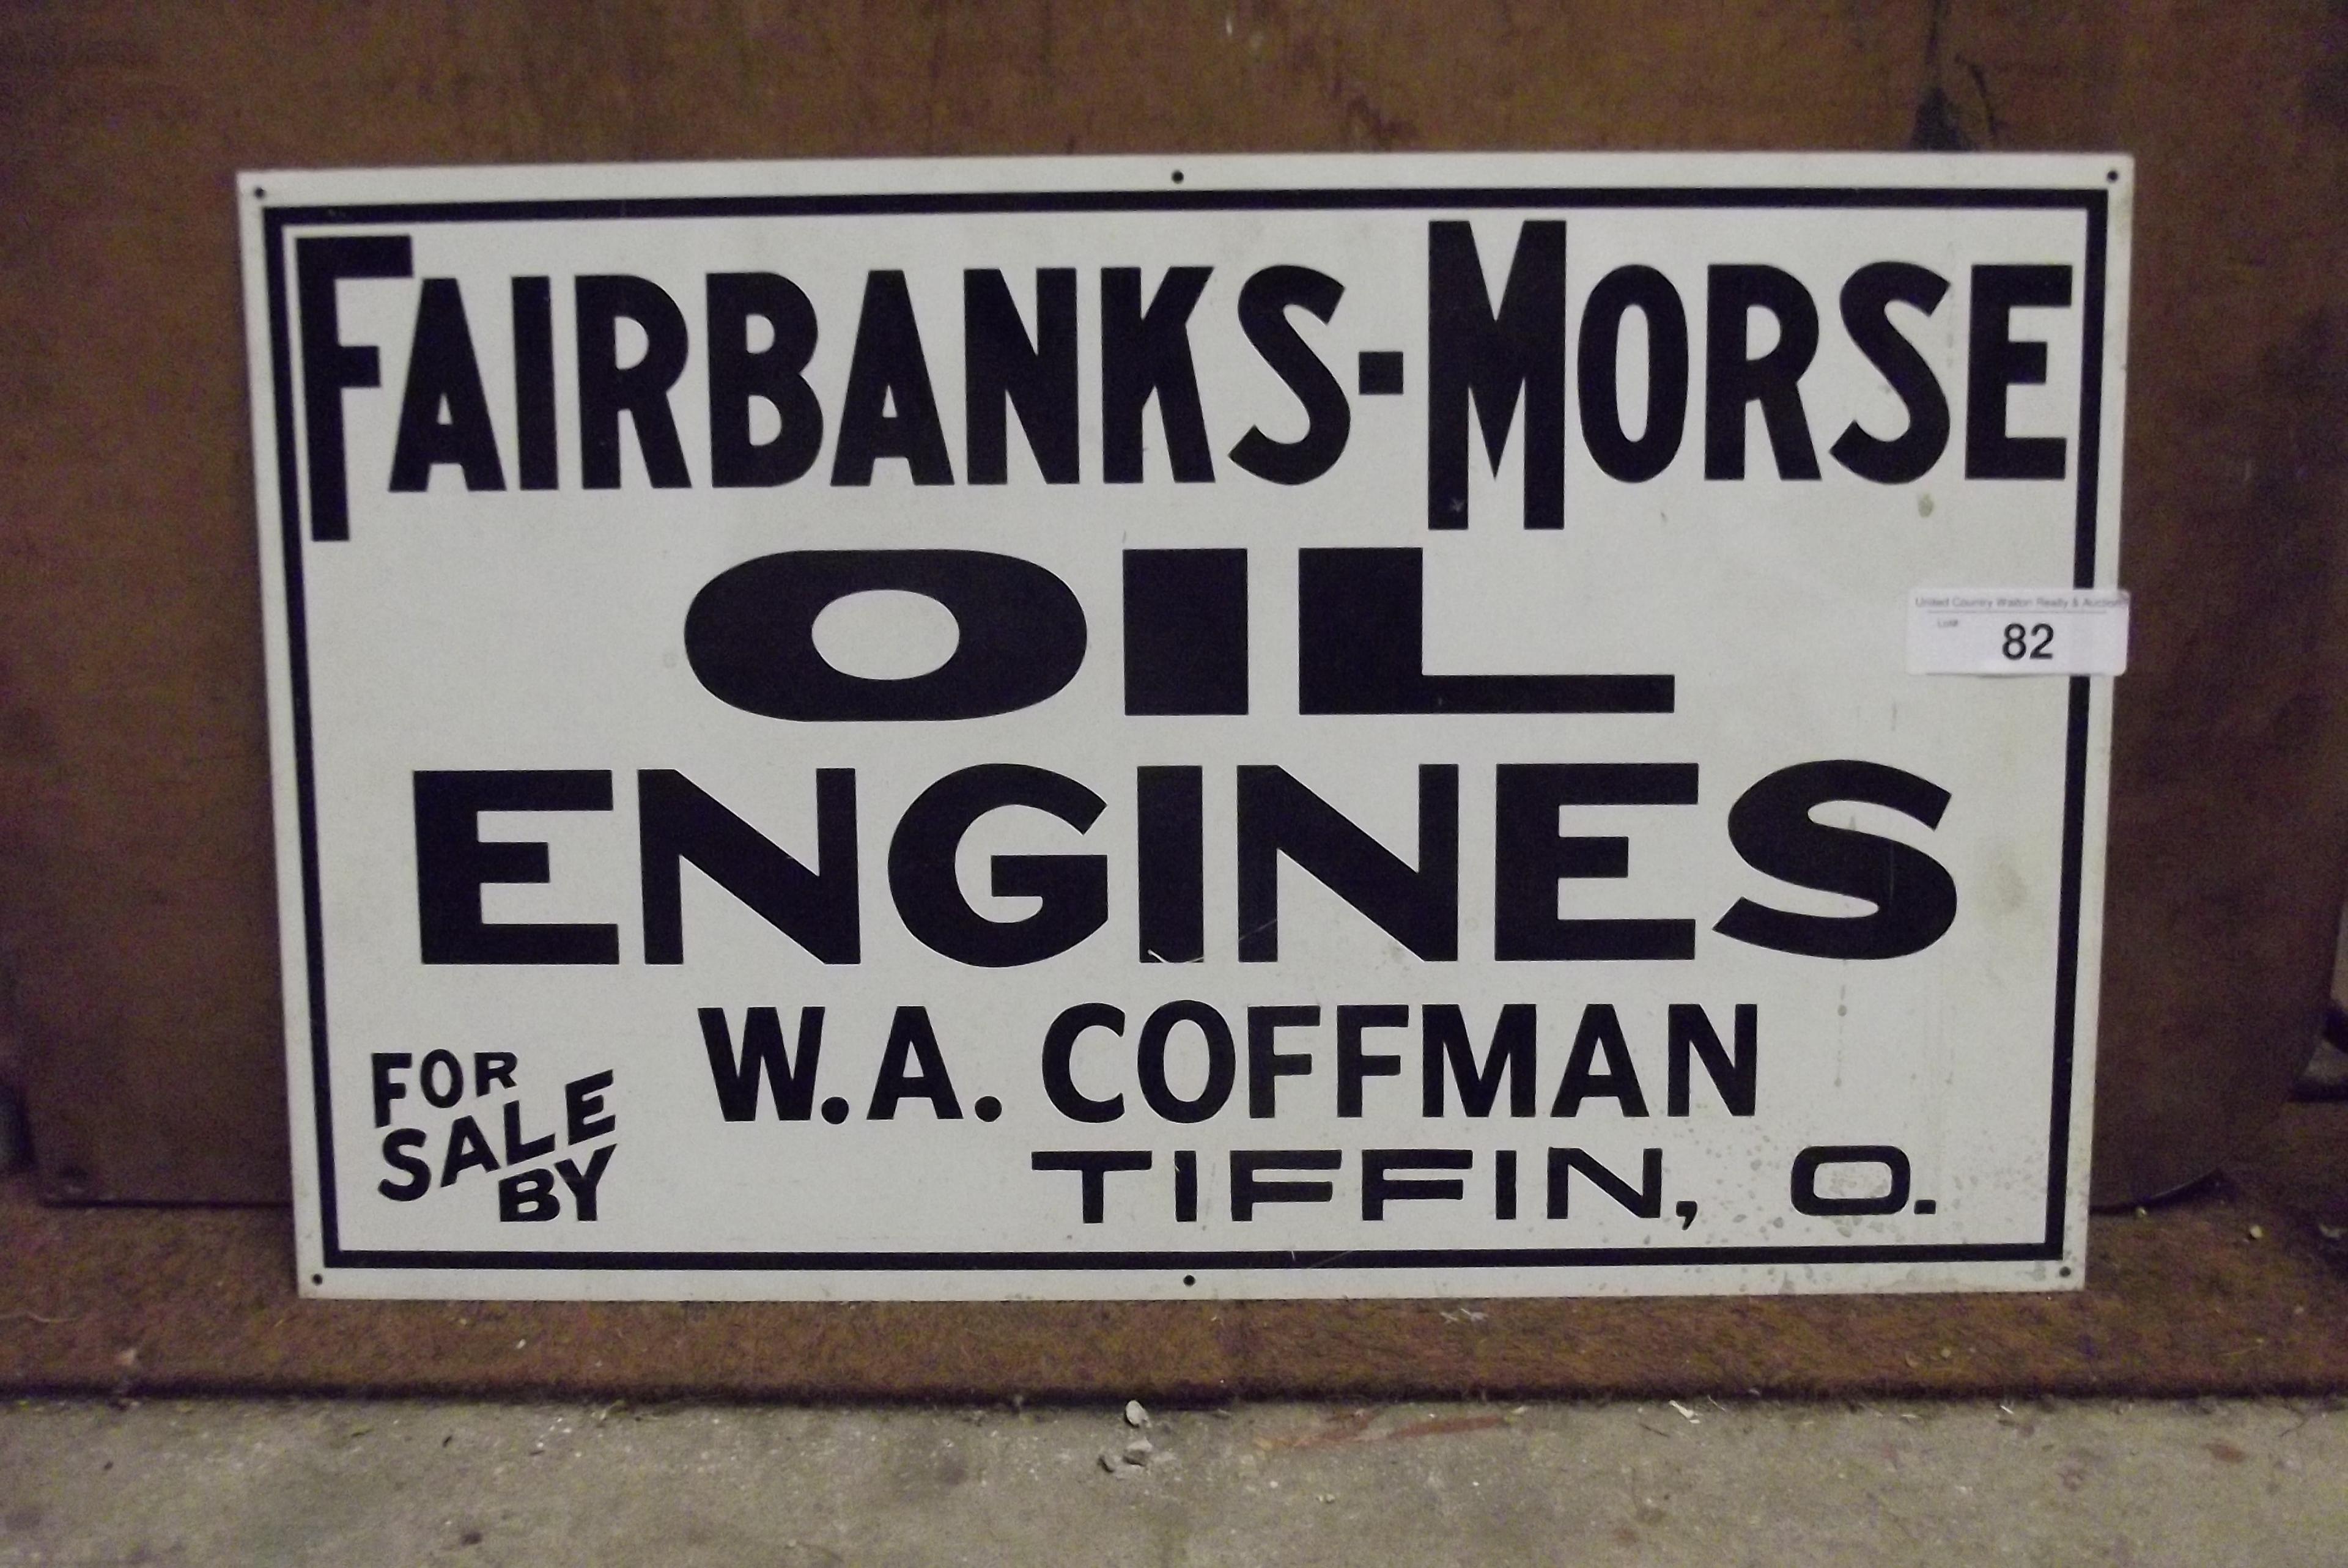 Fairbanks Morse Sign